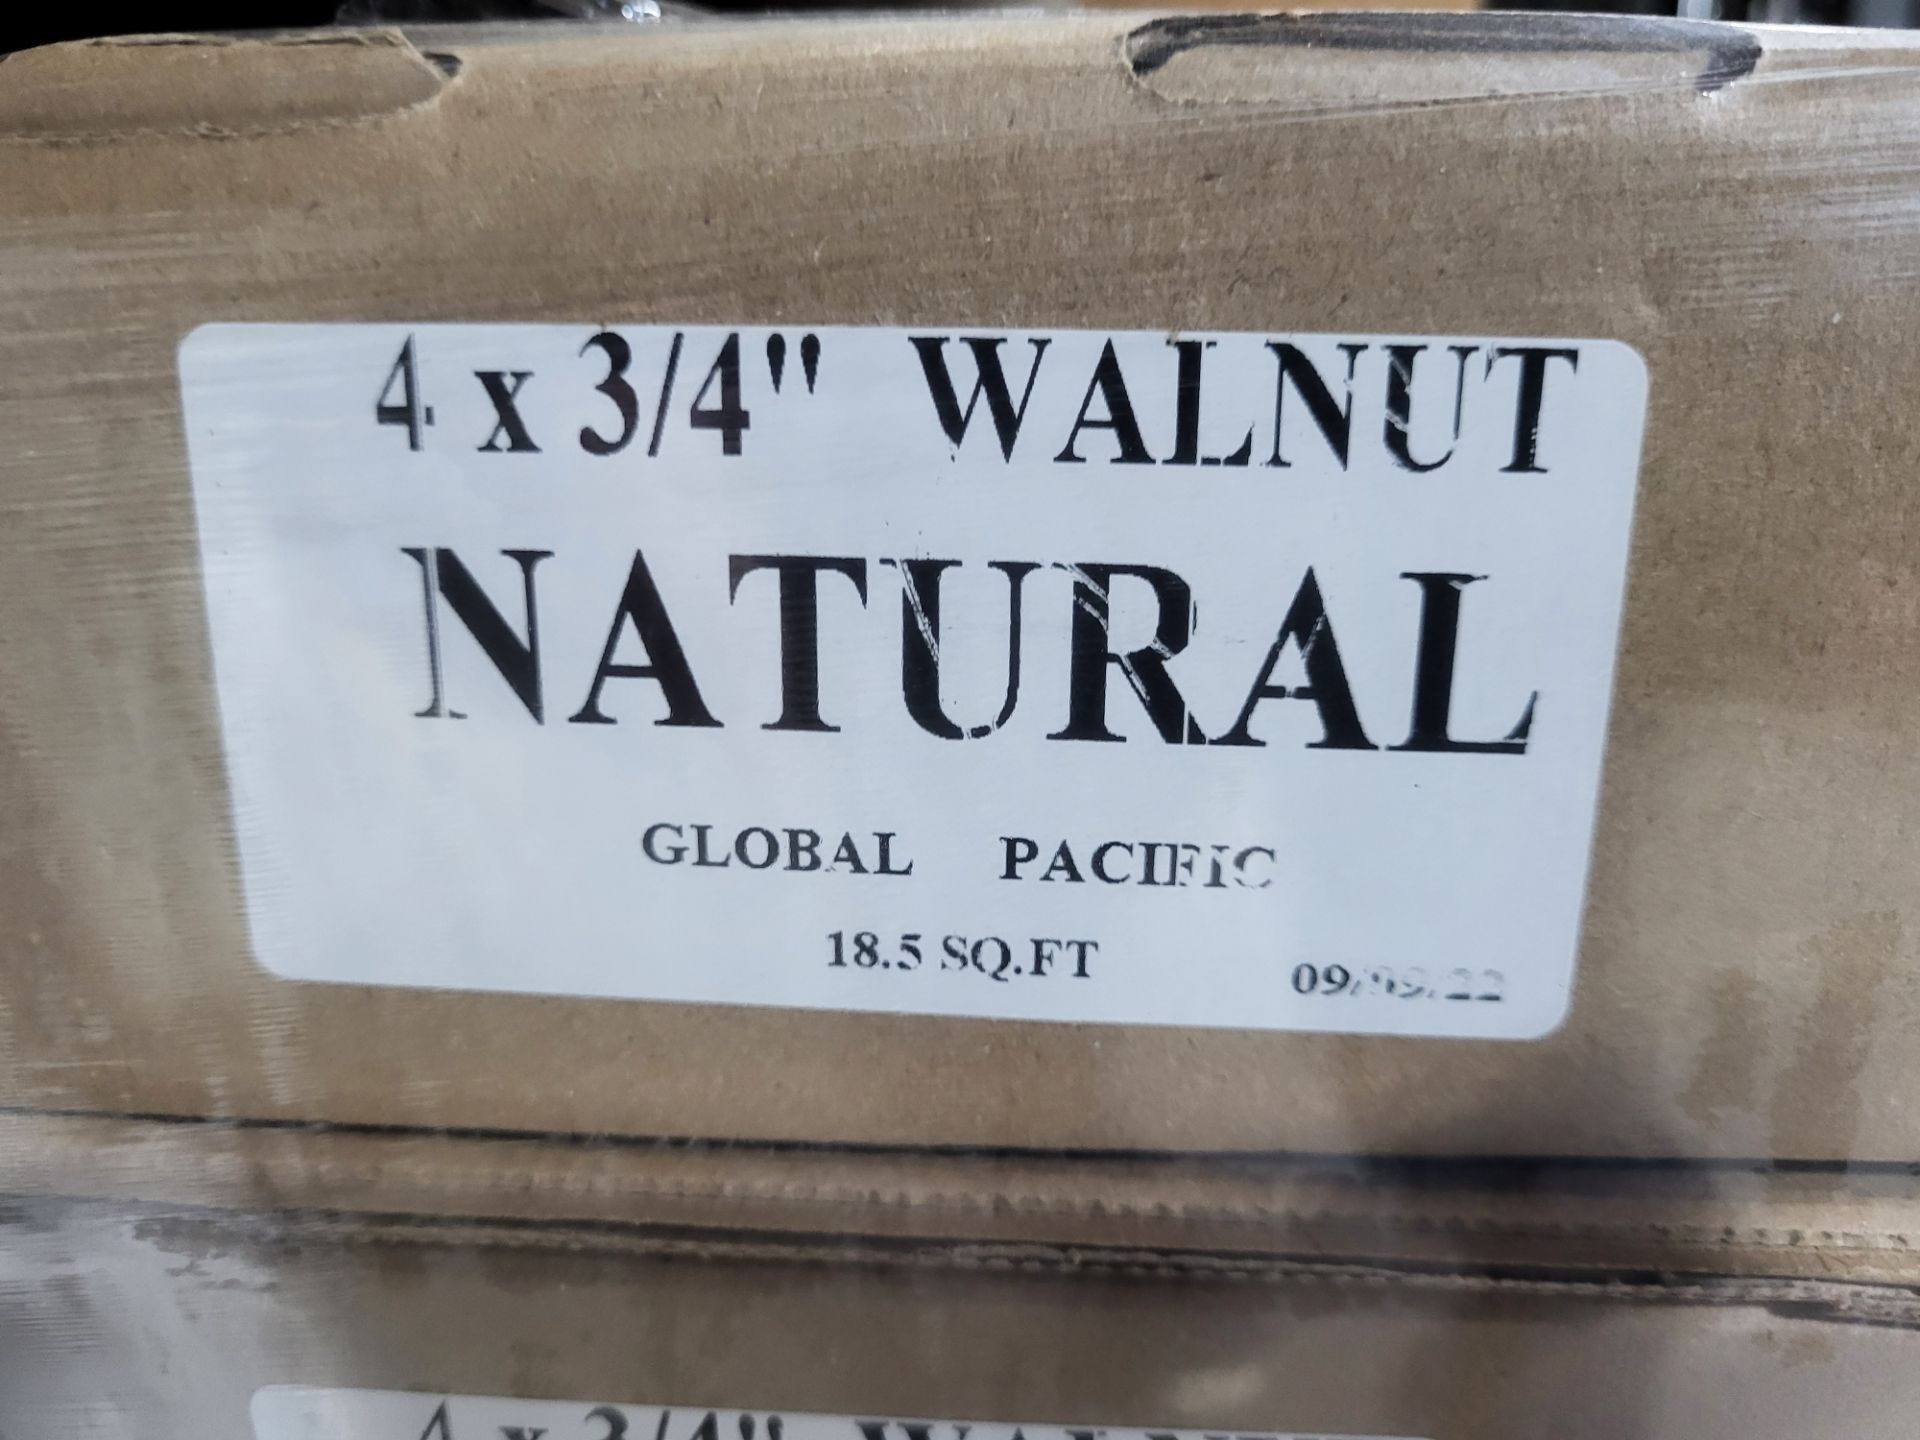 BOXES - GLOBAL PACIFIC WALNUT 4 X 3/4" NATURAL FINISH HARDWOOD FLOORING (18.5 SQFT / BOX) - Image 2 of 4